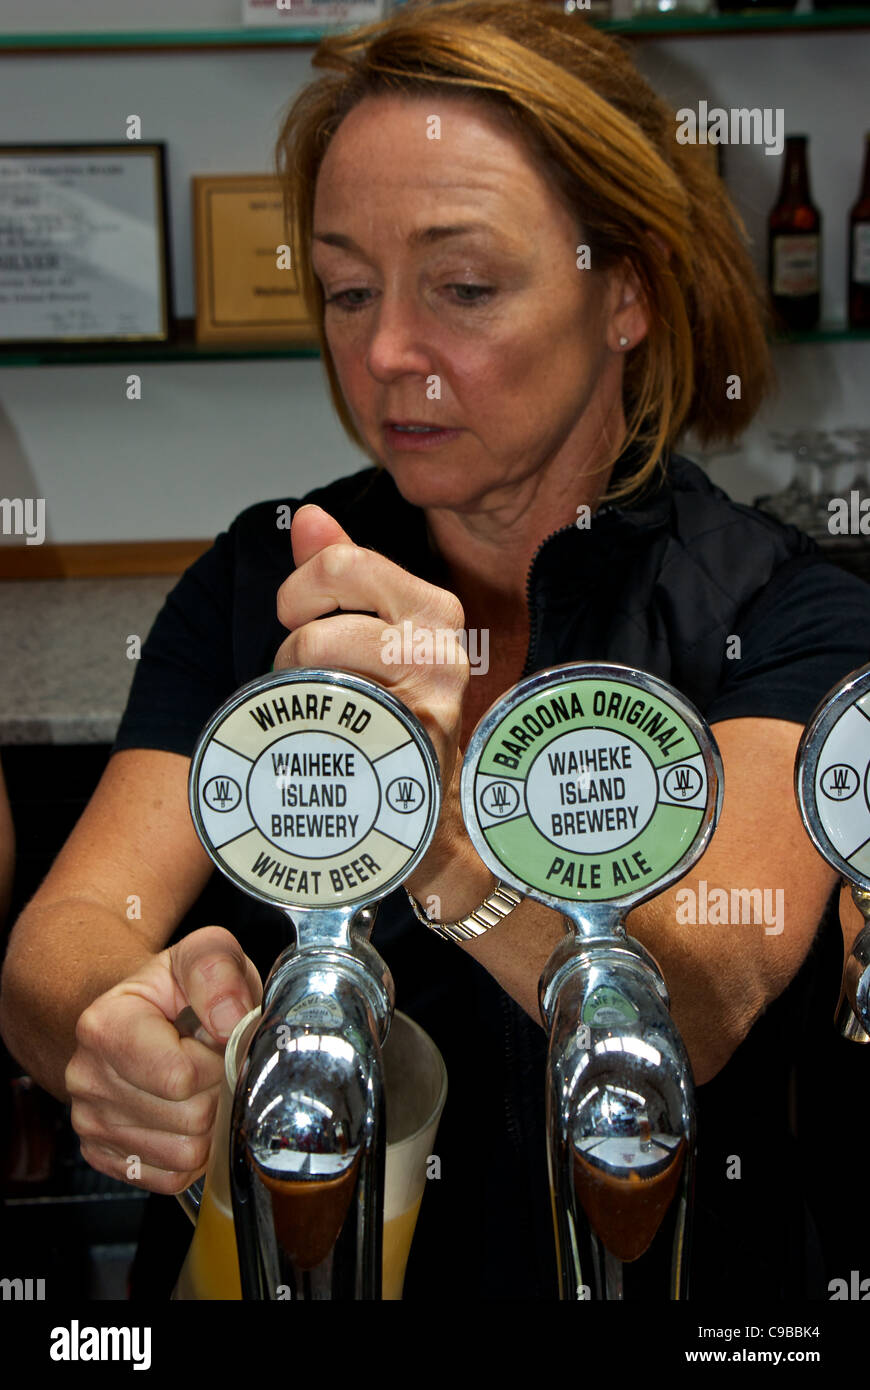 Female pub owner pulling frosty mug of wheat beer on tap at Wild on Waiheke Island microbrewery Stock Photo